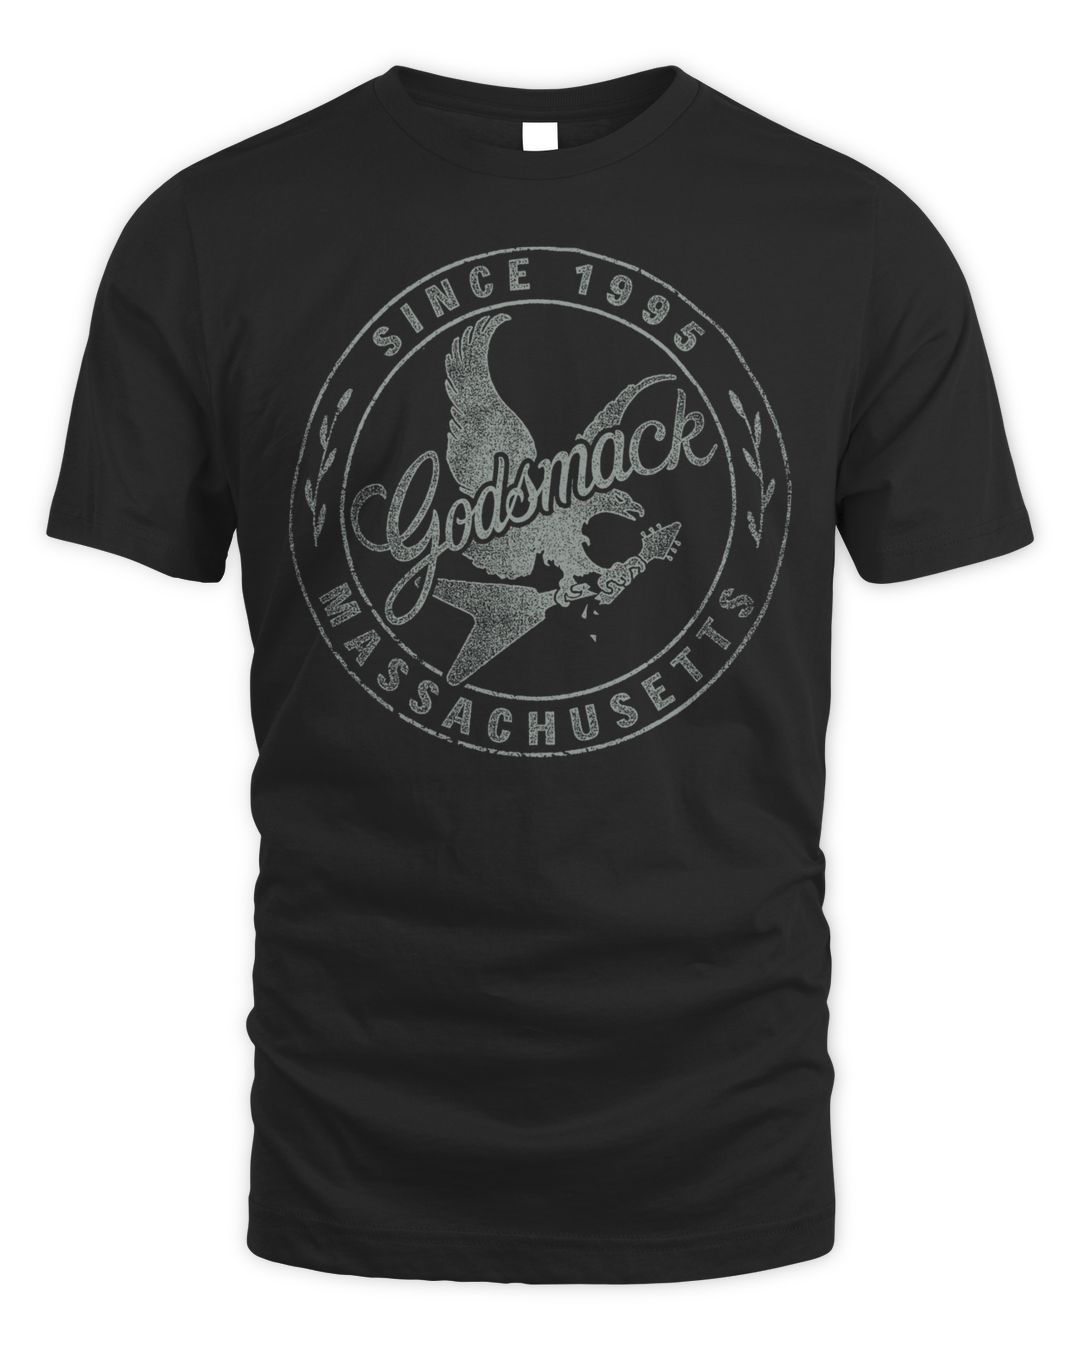 Godsmack Merch Flying Tour Shirt